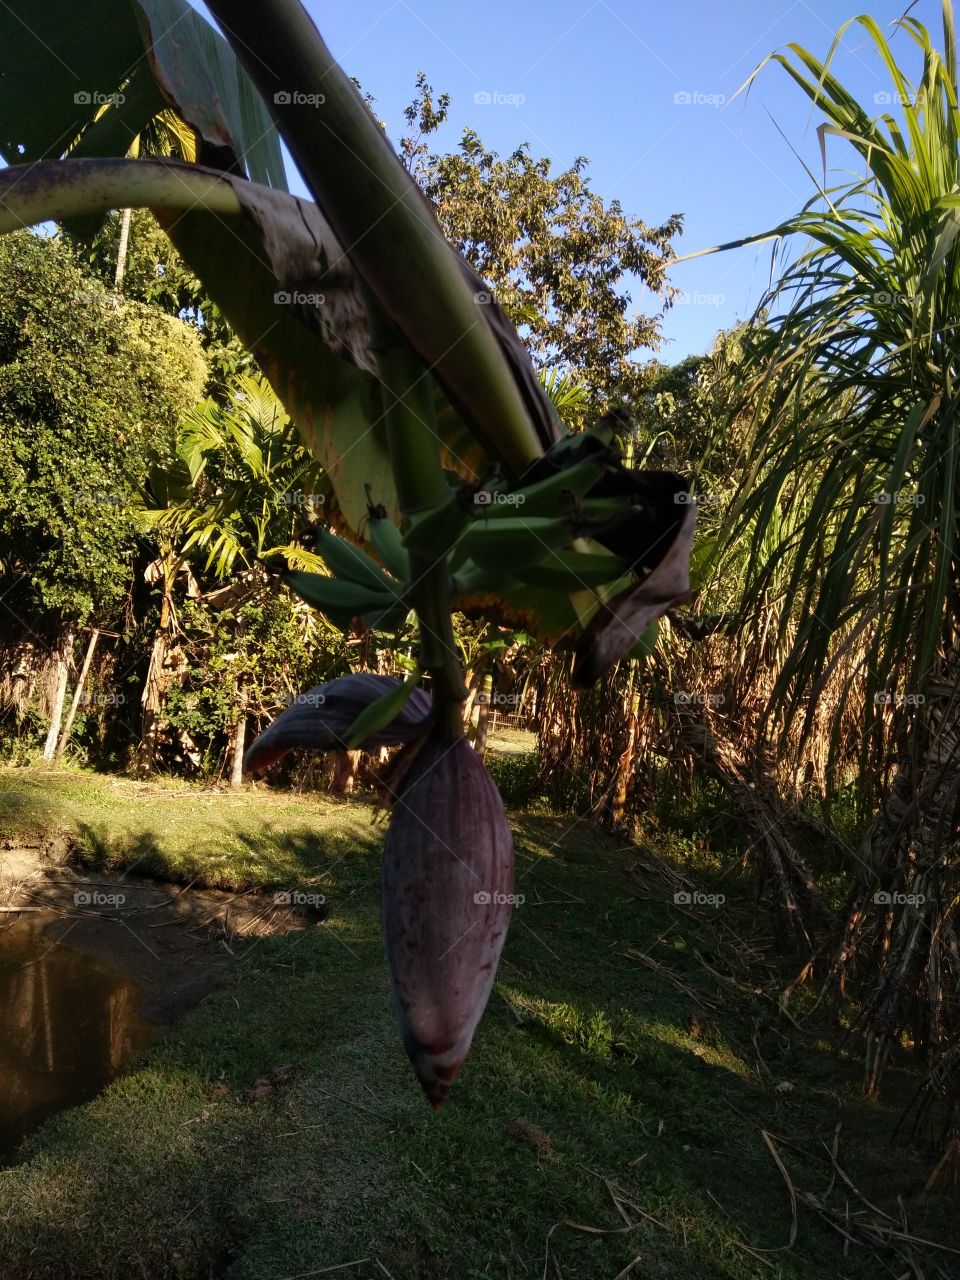 Banana flower with banana